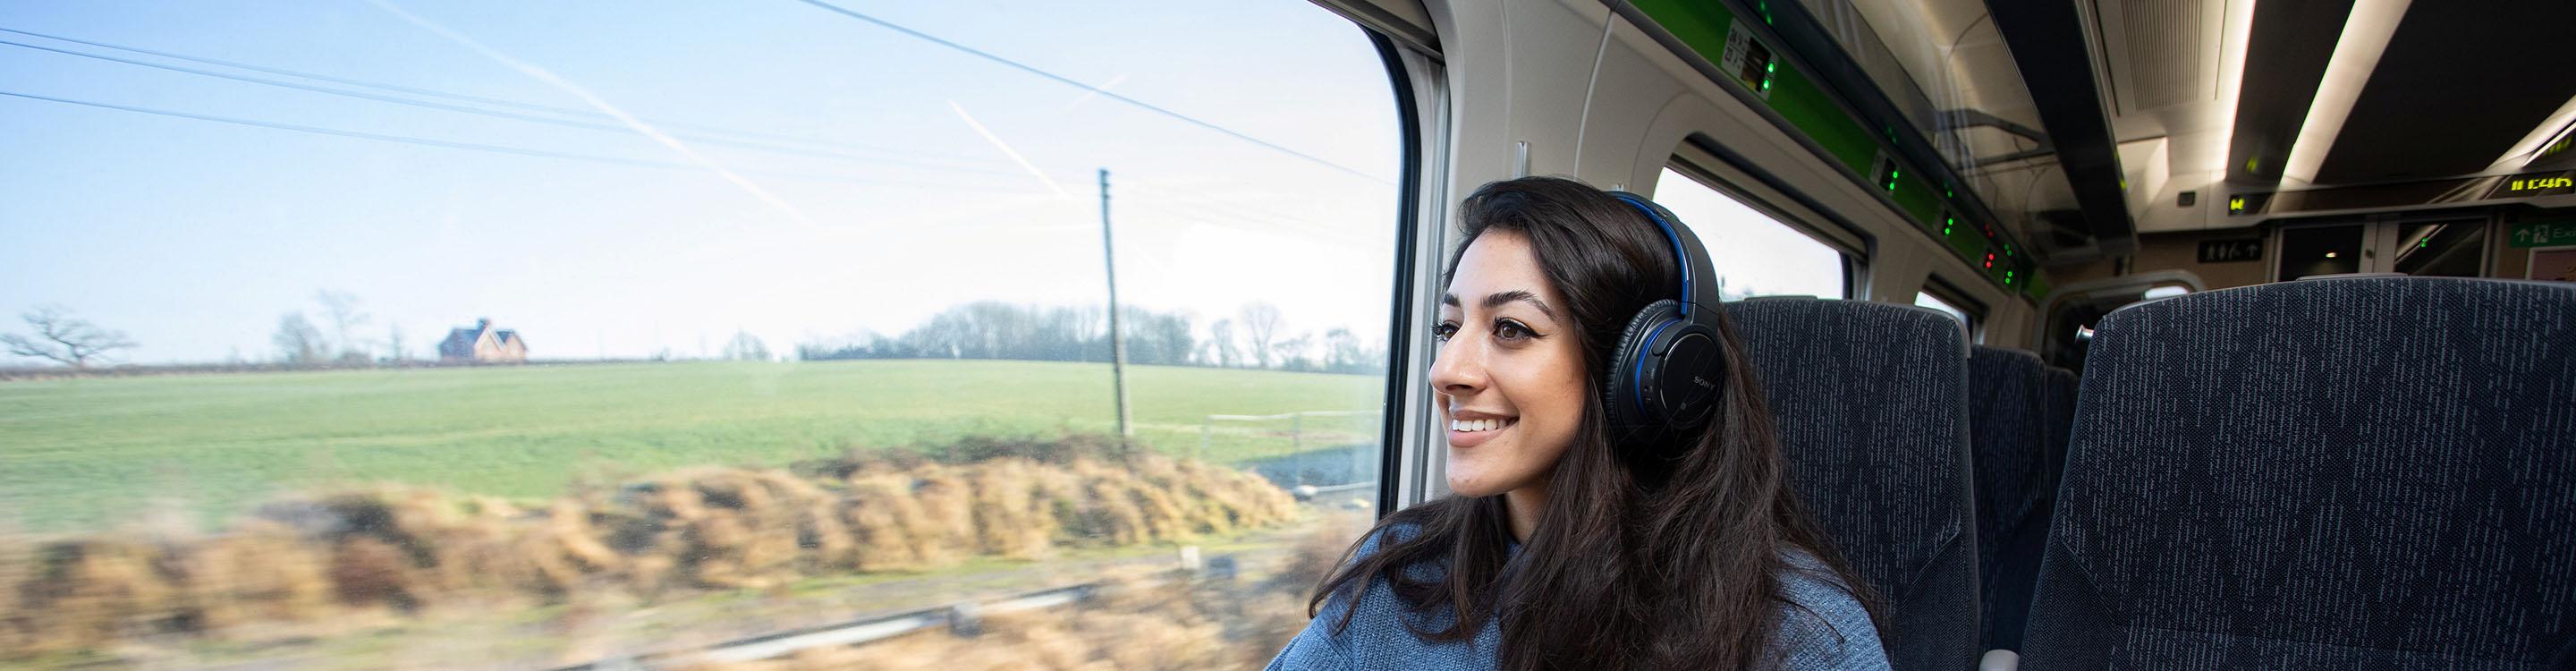 Customer sitting on GWR train looking outside window, listening to Window Seater app